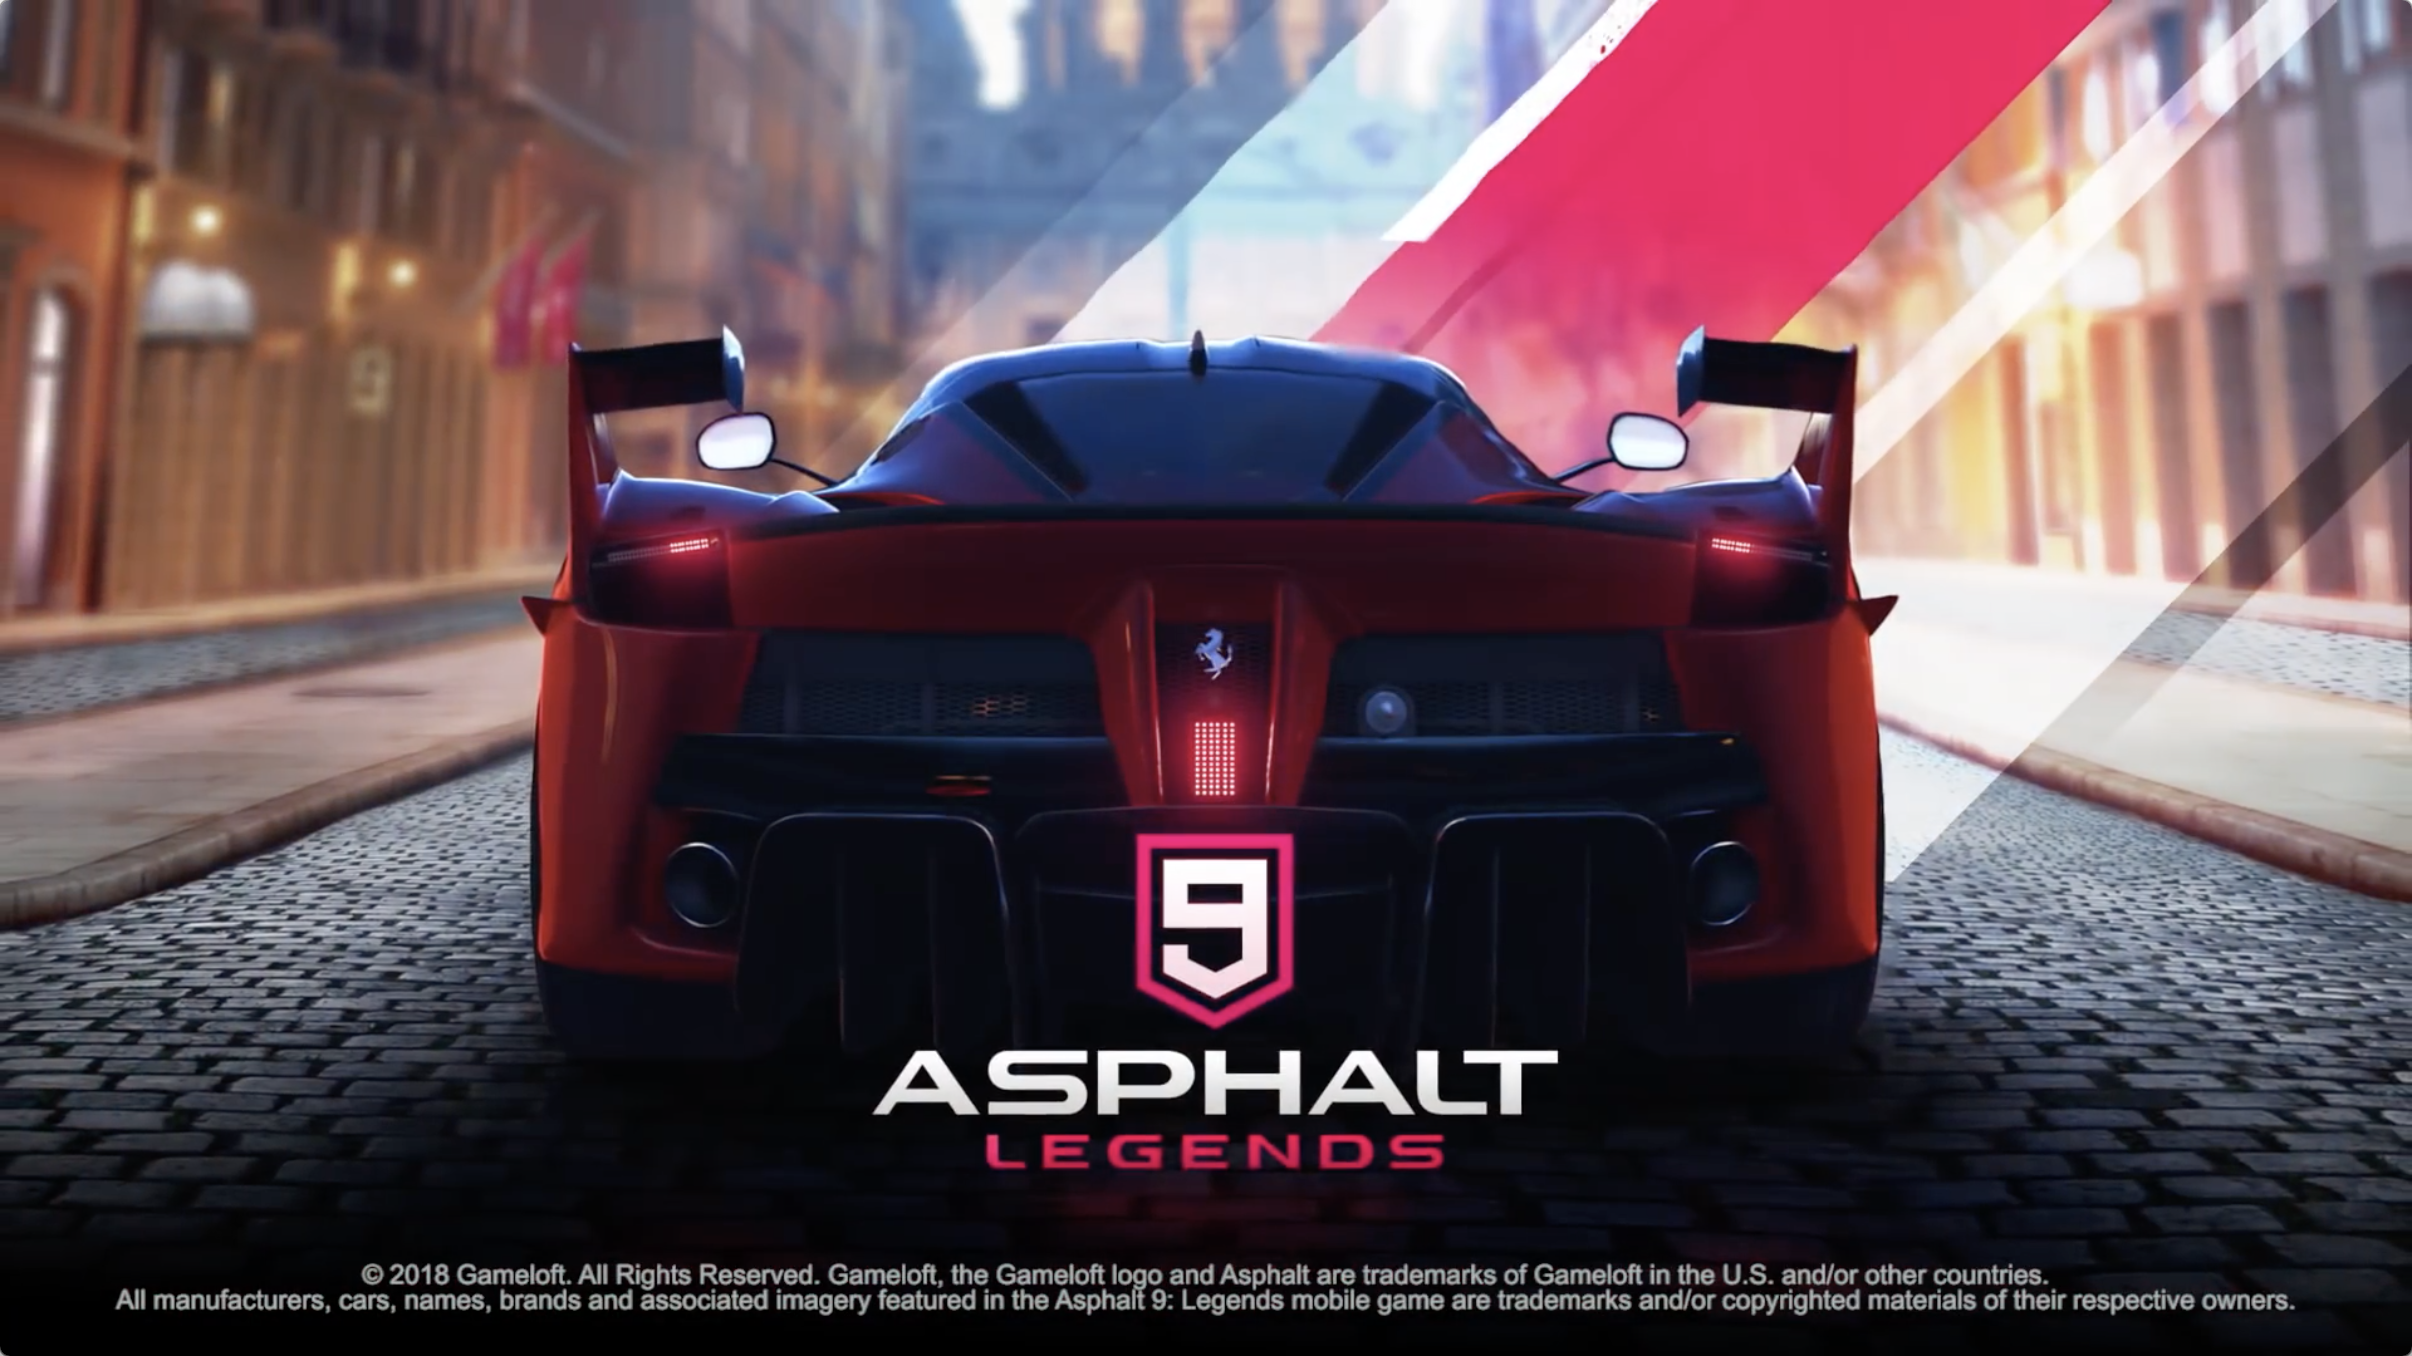 Asphalt 9: Legends android iOS apk download for free-TapTap